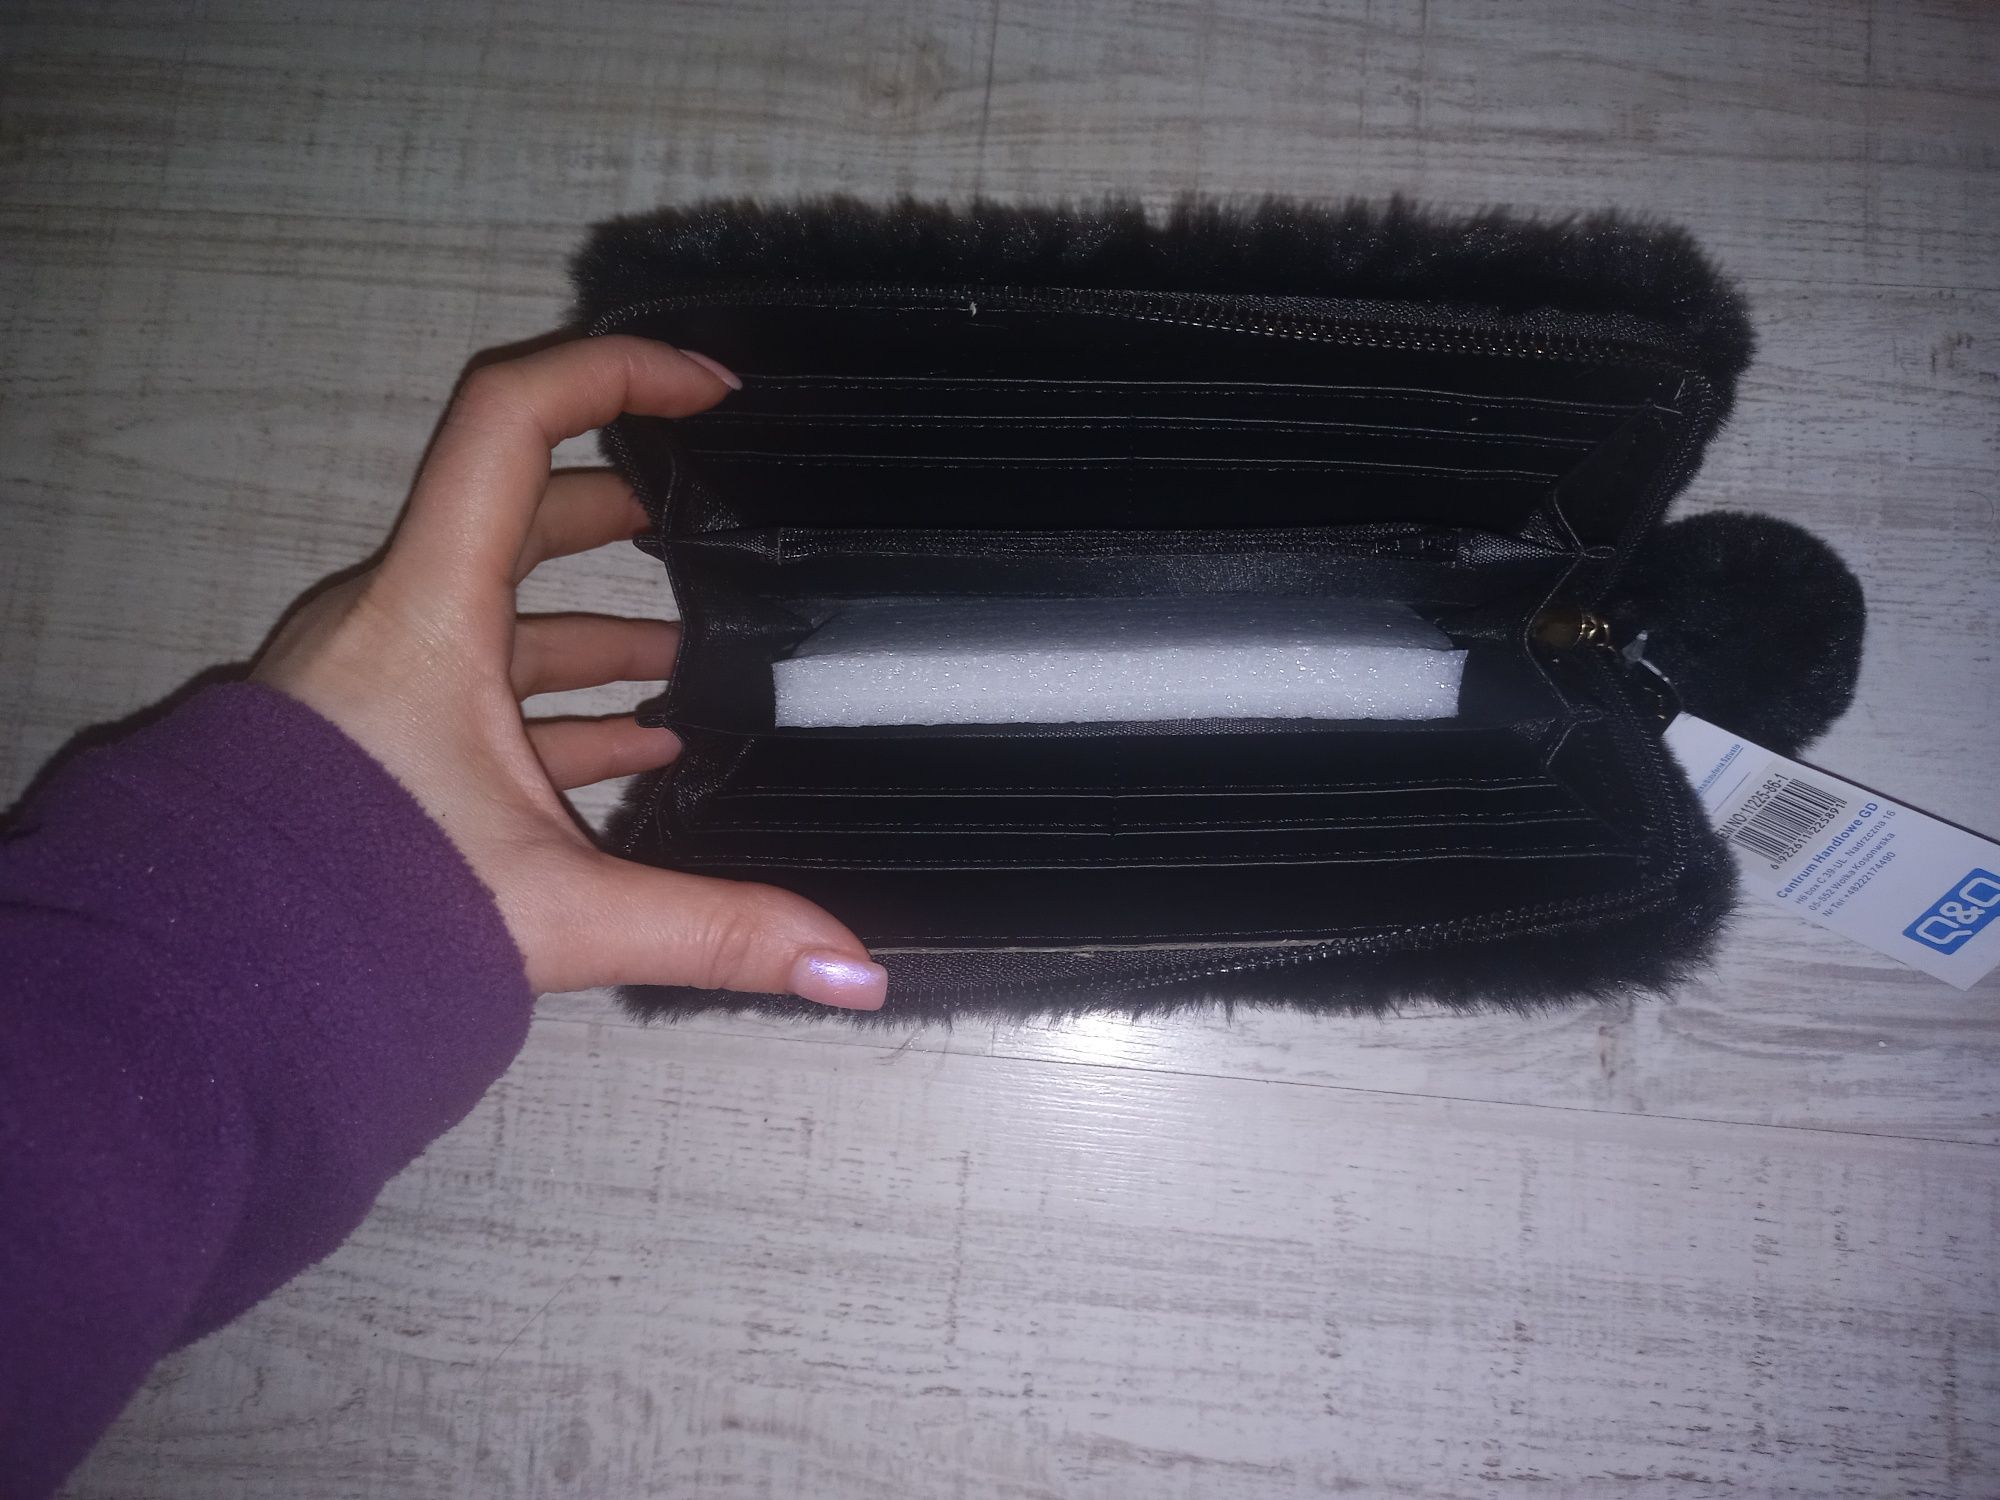 Czarny futerkowy portfel kot